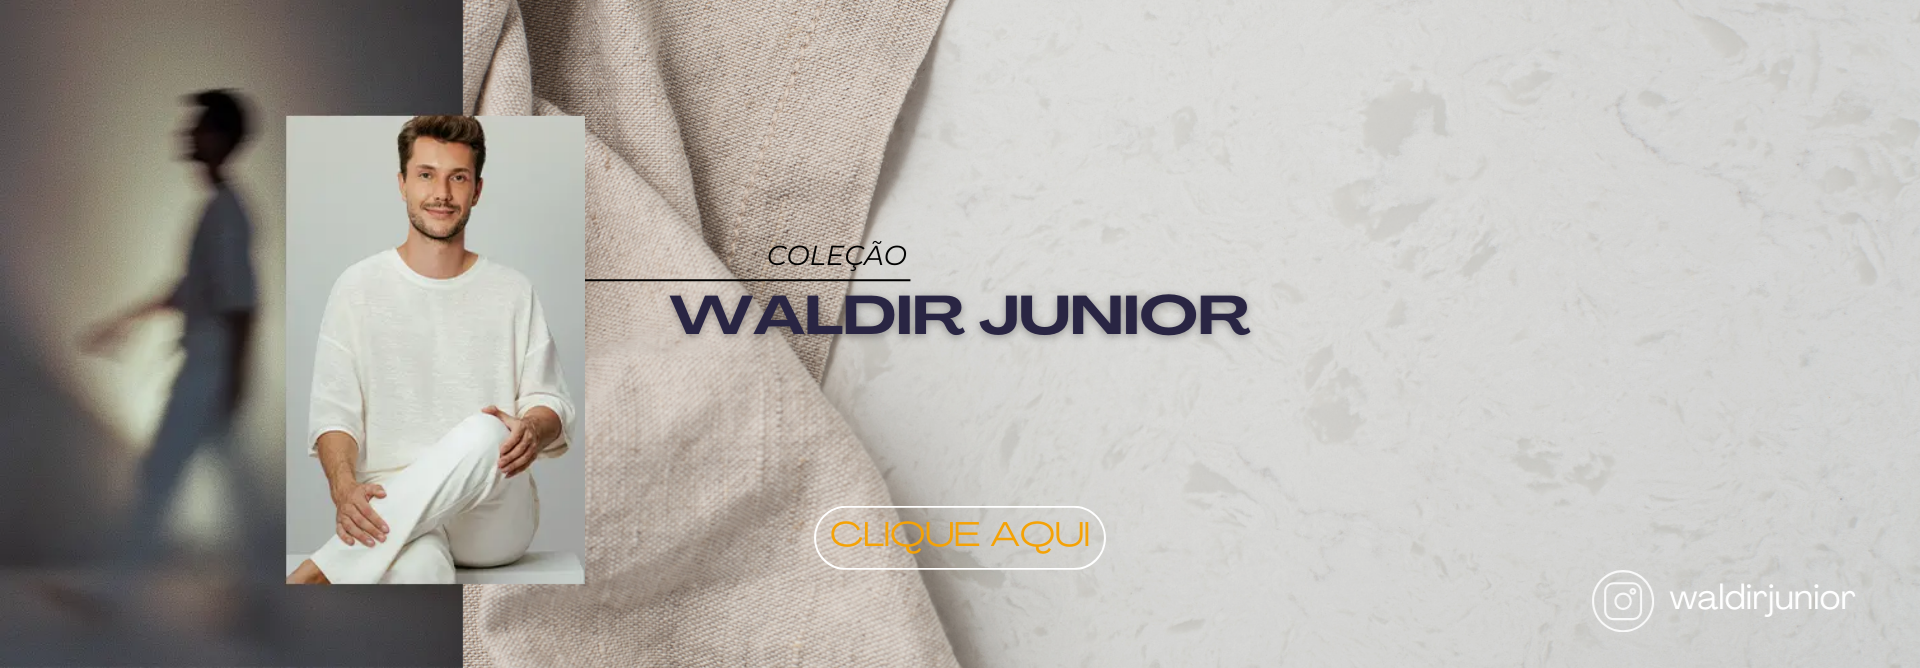 Waldir Junior